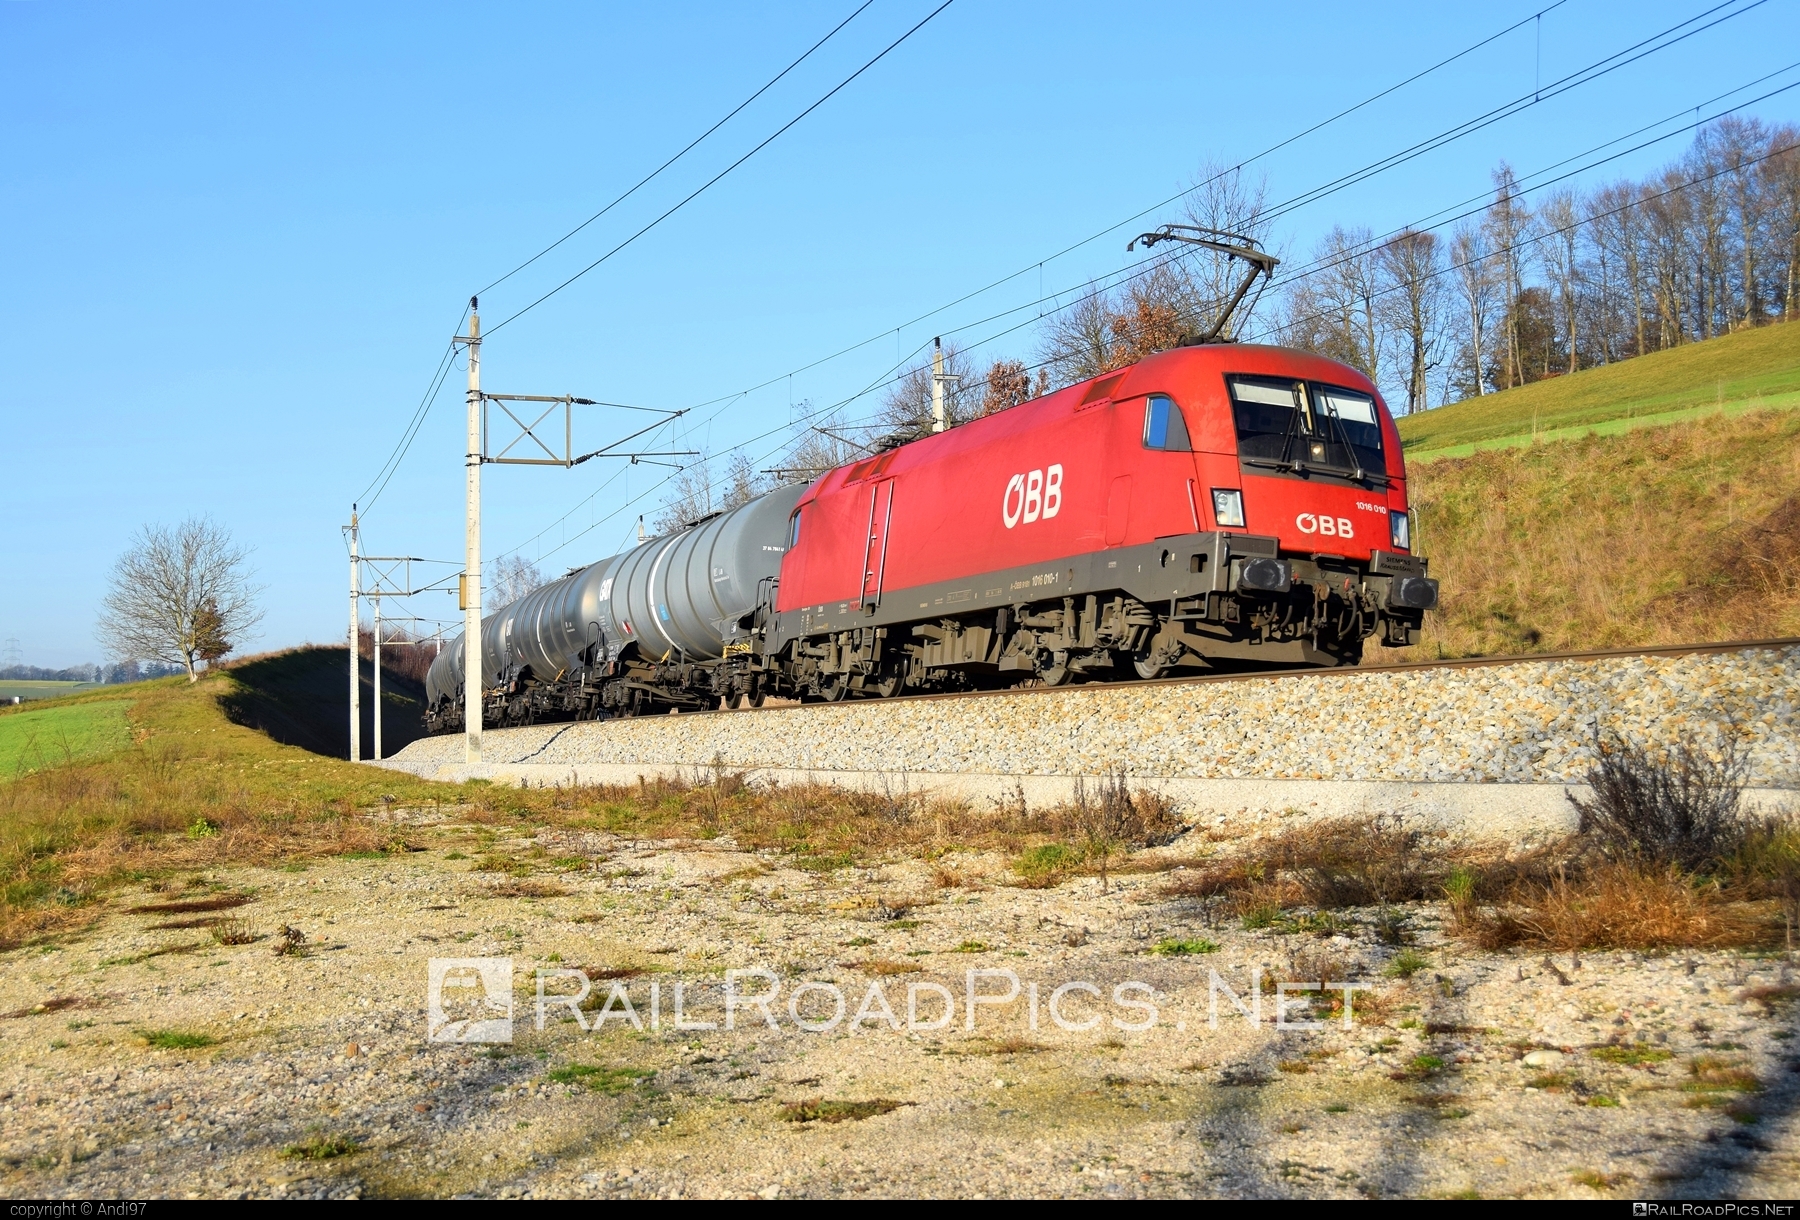 Siemens ES 64 U2 - 1016 010 operated by Rail Cargo Austria AG #es64 #es64u2 #eurosprinter #kesselwagen #obb #osterreichischebundesbahnen #rcw #siemens #siemensEs64 #siemensEs64u2 #siemenstaurus #tankwagon #taurus #tauruslocomotive